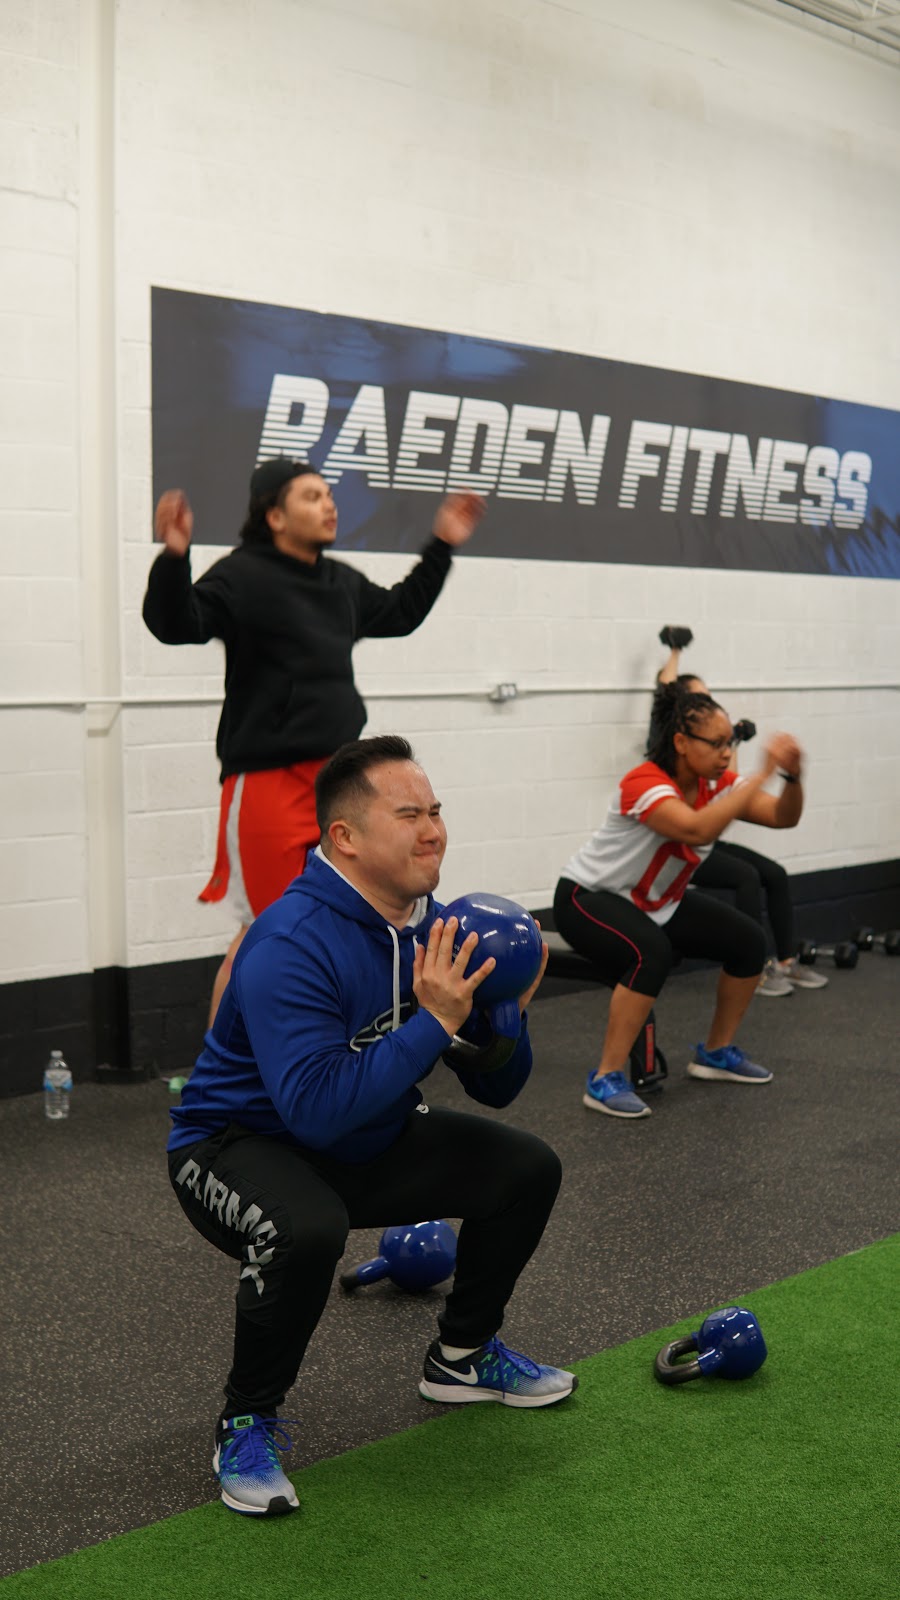 Raeden Fitness | 285 Progress Ave unit 11, Scarborough, ON M1P 2Z3, Canada | Phone: (416) 893-5533